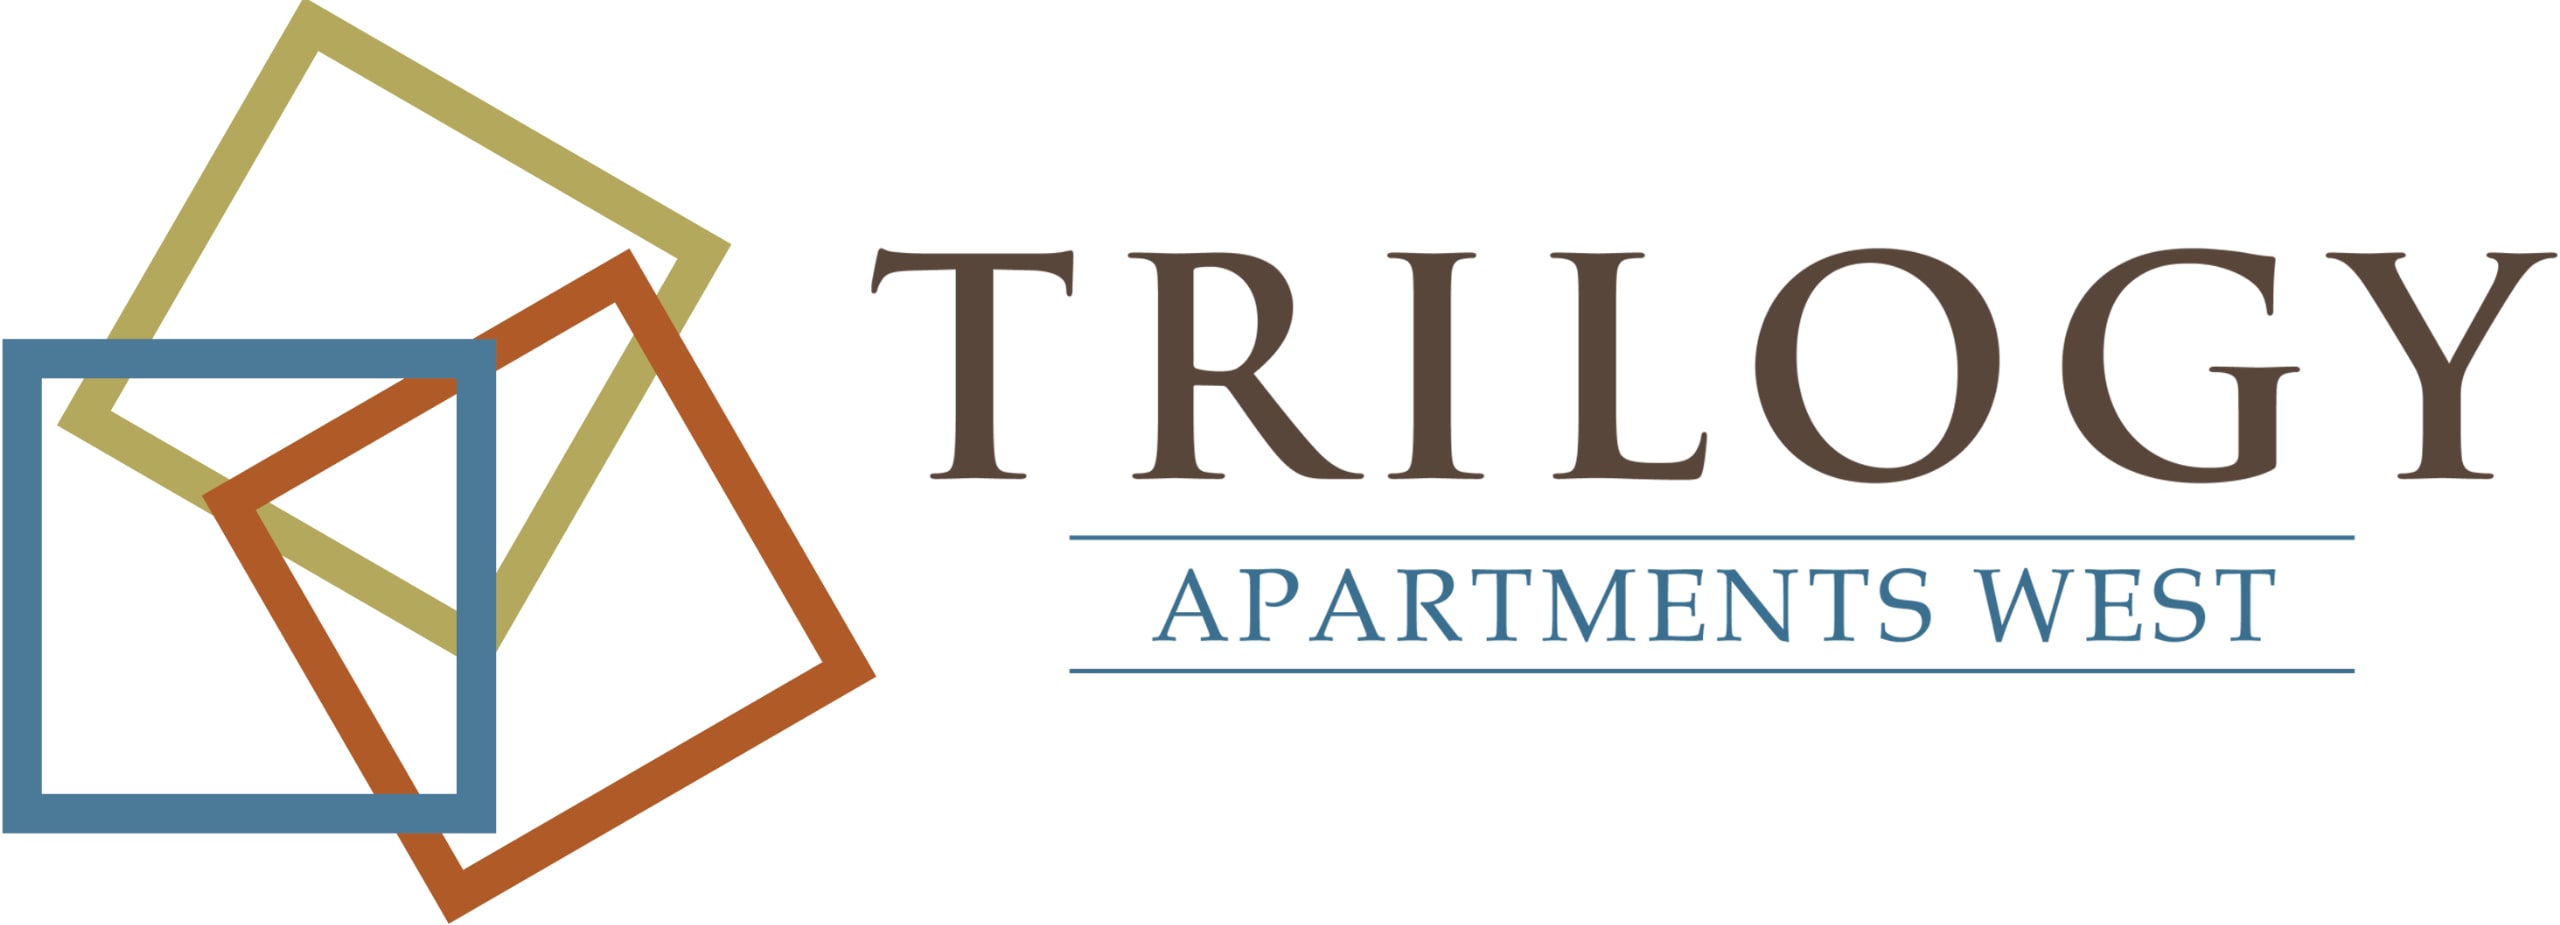 Trilogy West Apartments logo